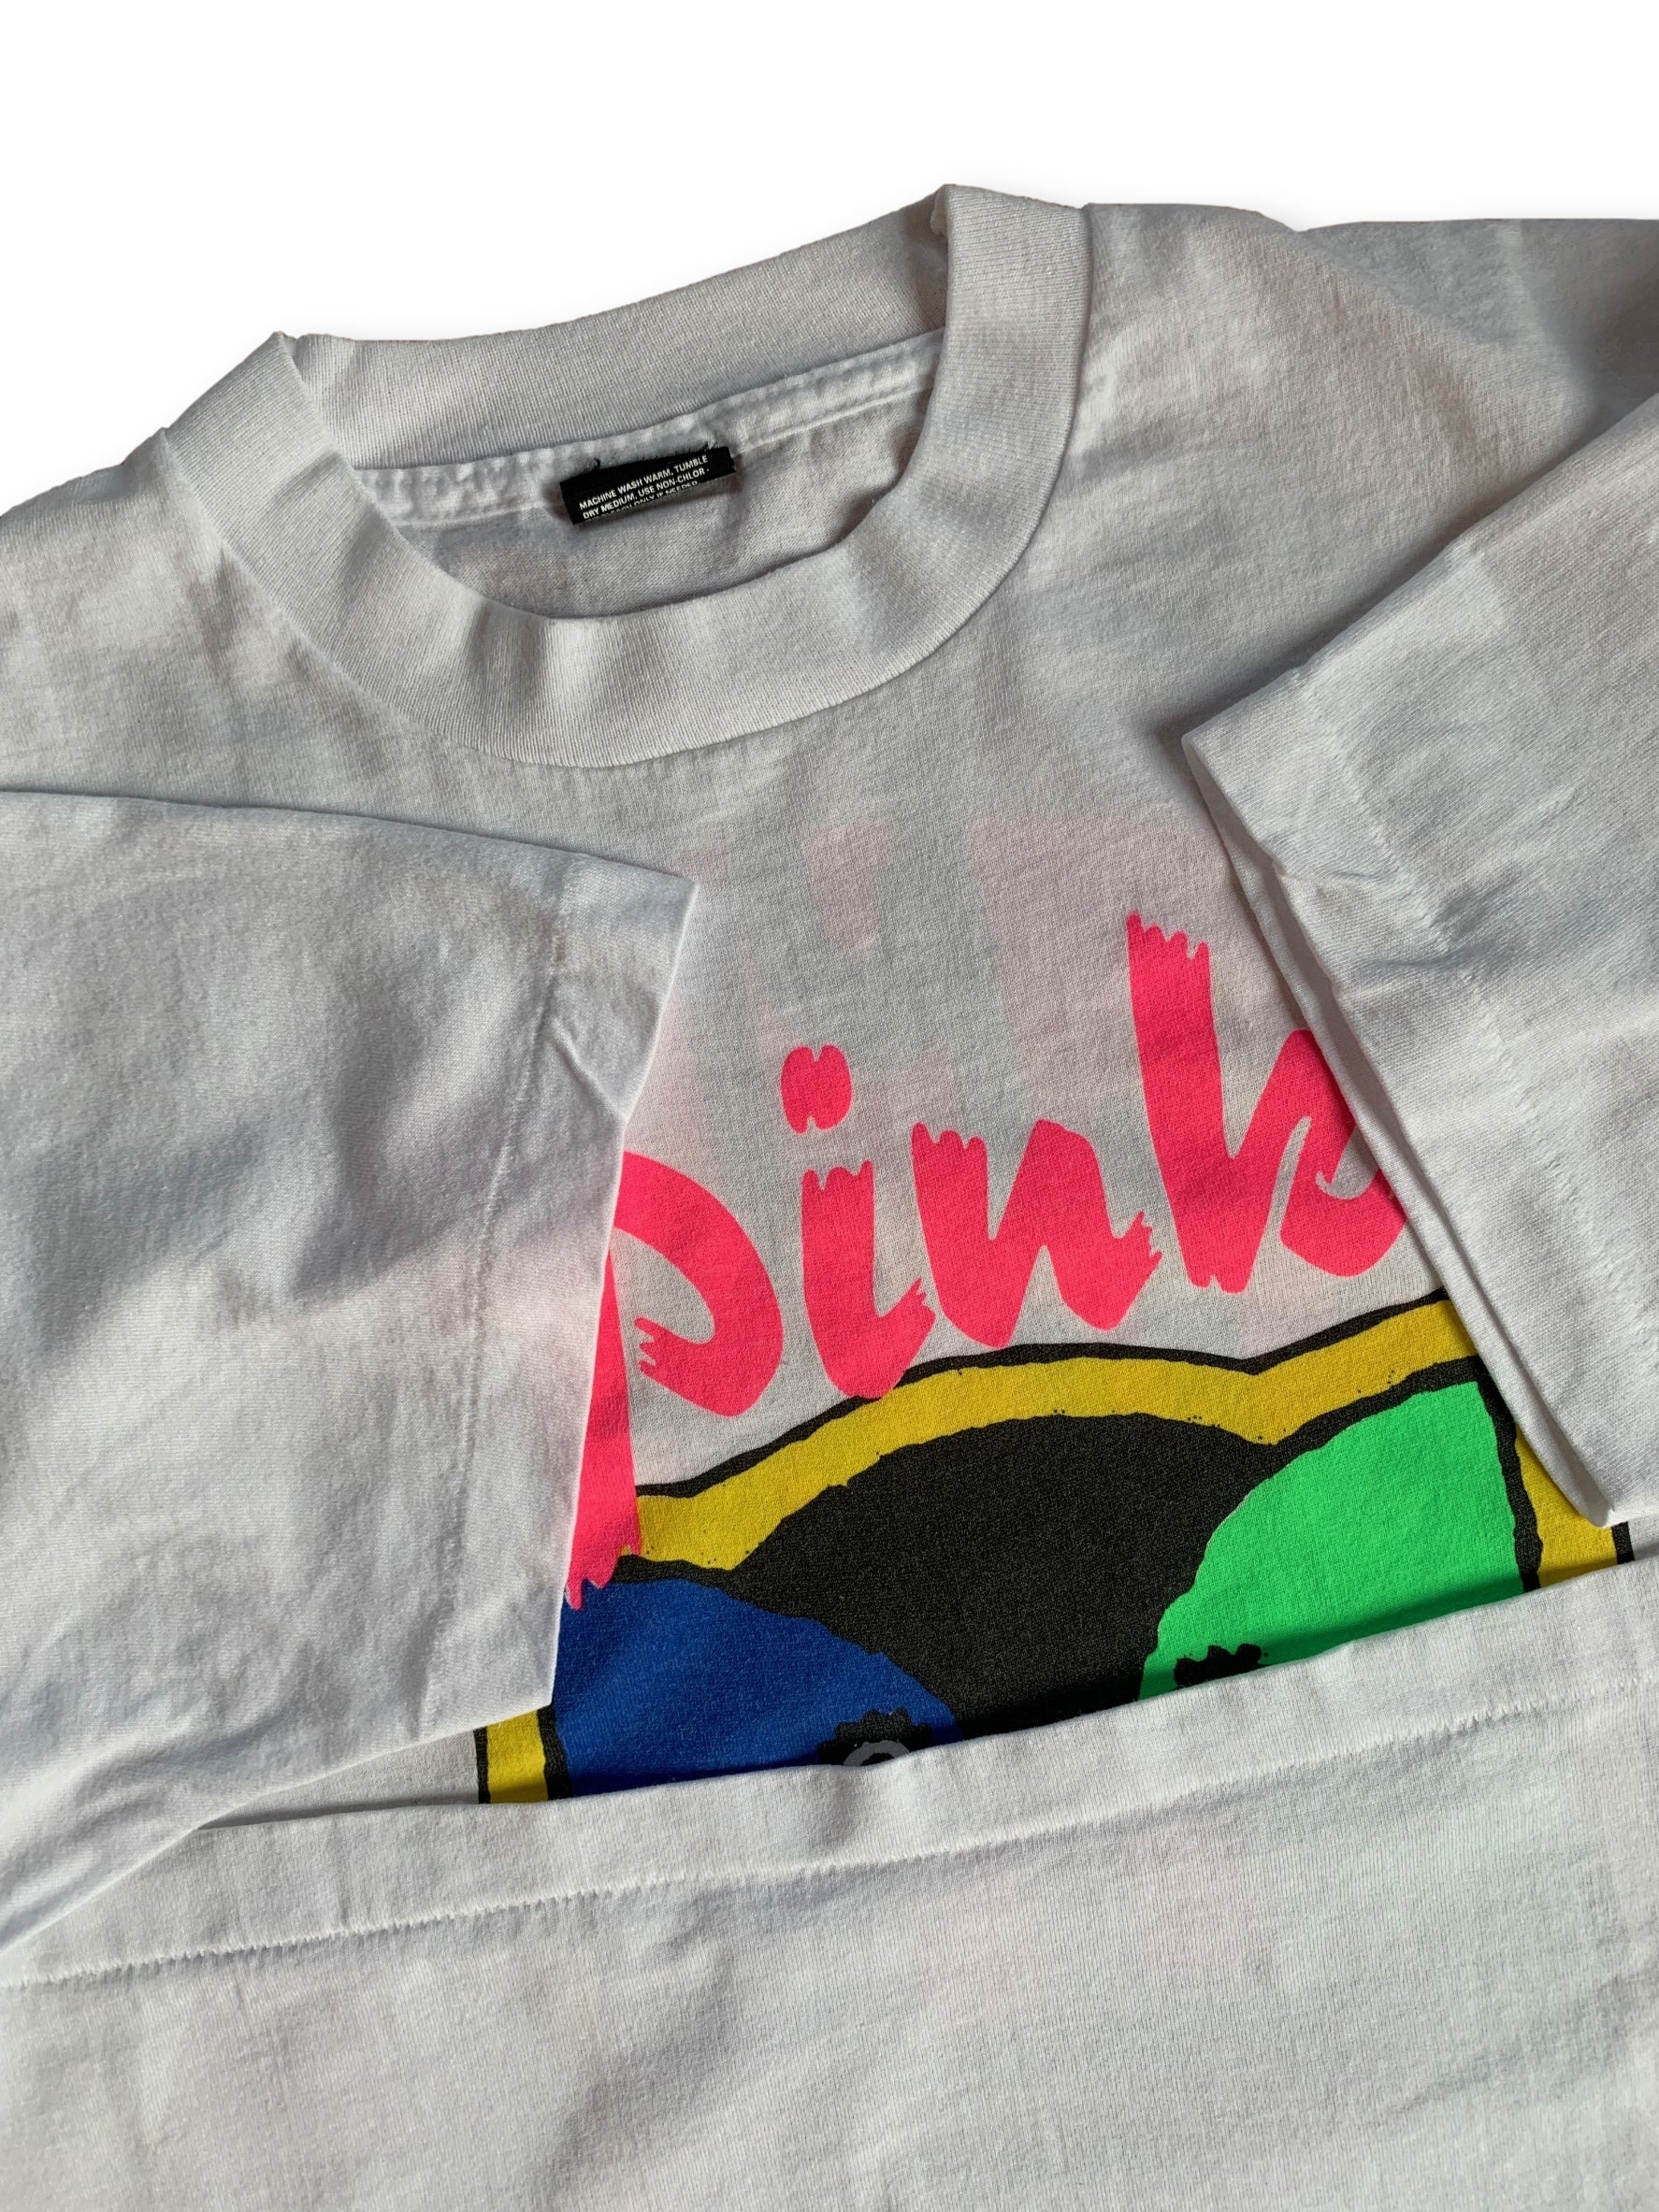 Vintage Pink Floyd 1994 World Tour T-Shirt - XL